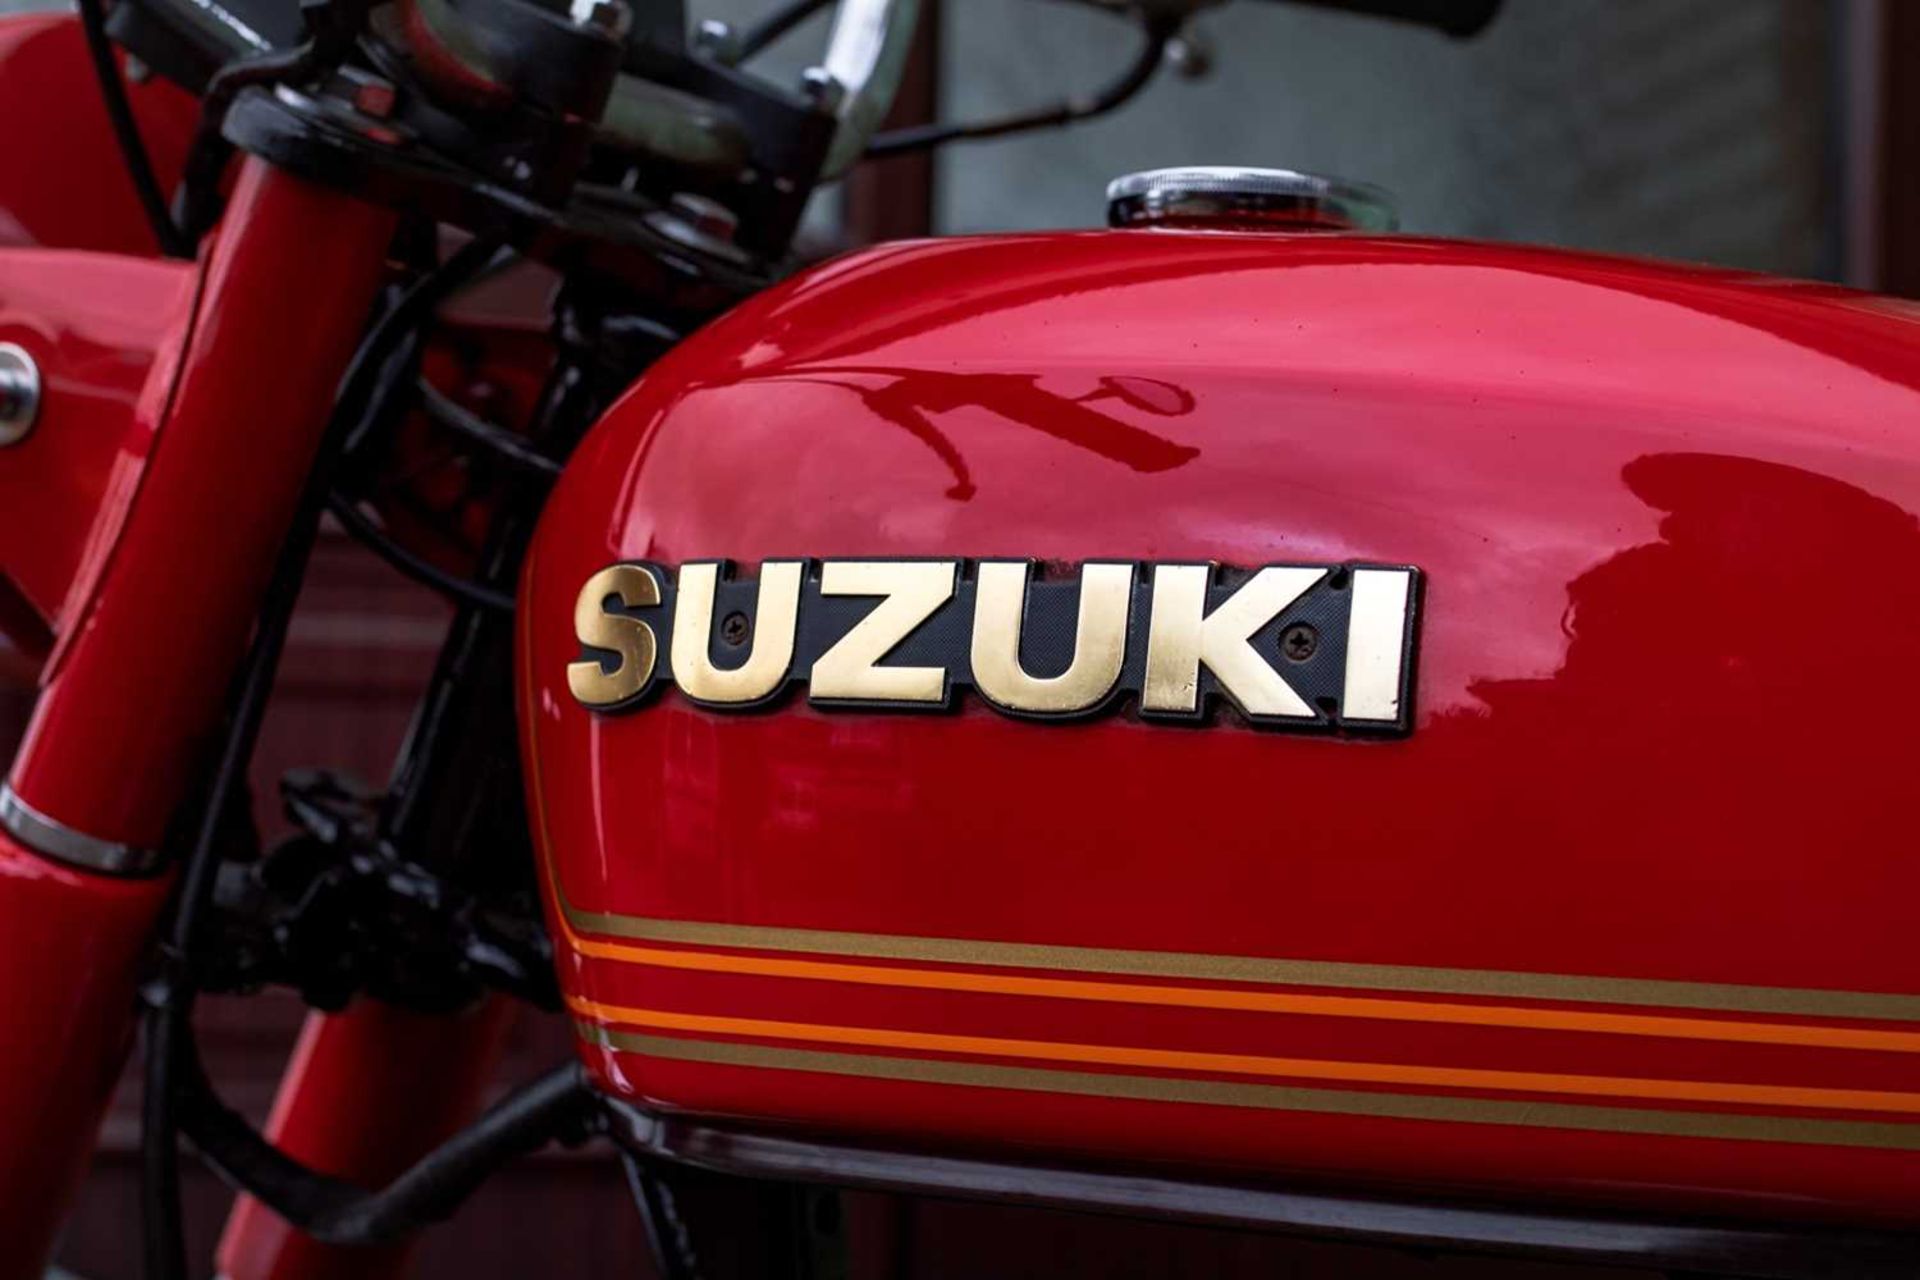 1979 Suzuki SB200 - Image 25 of 51